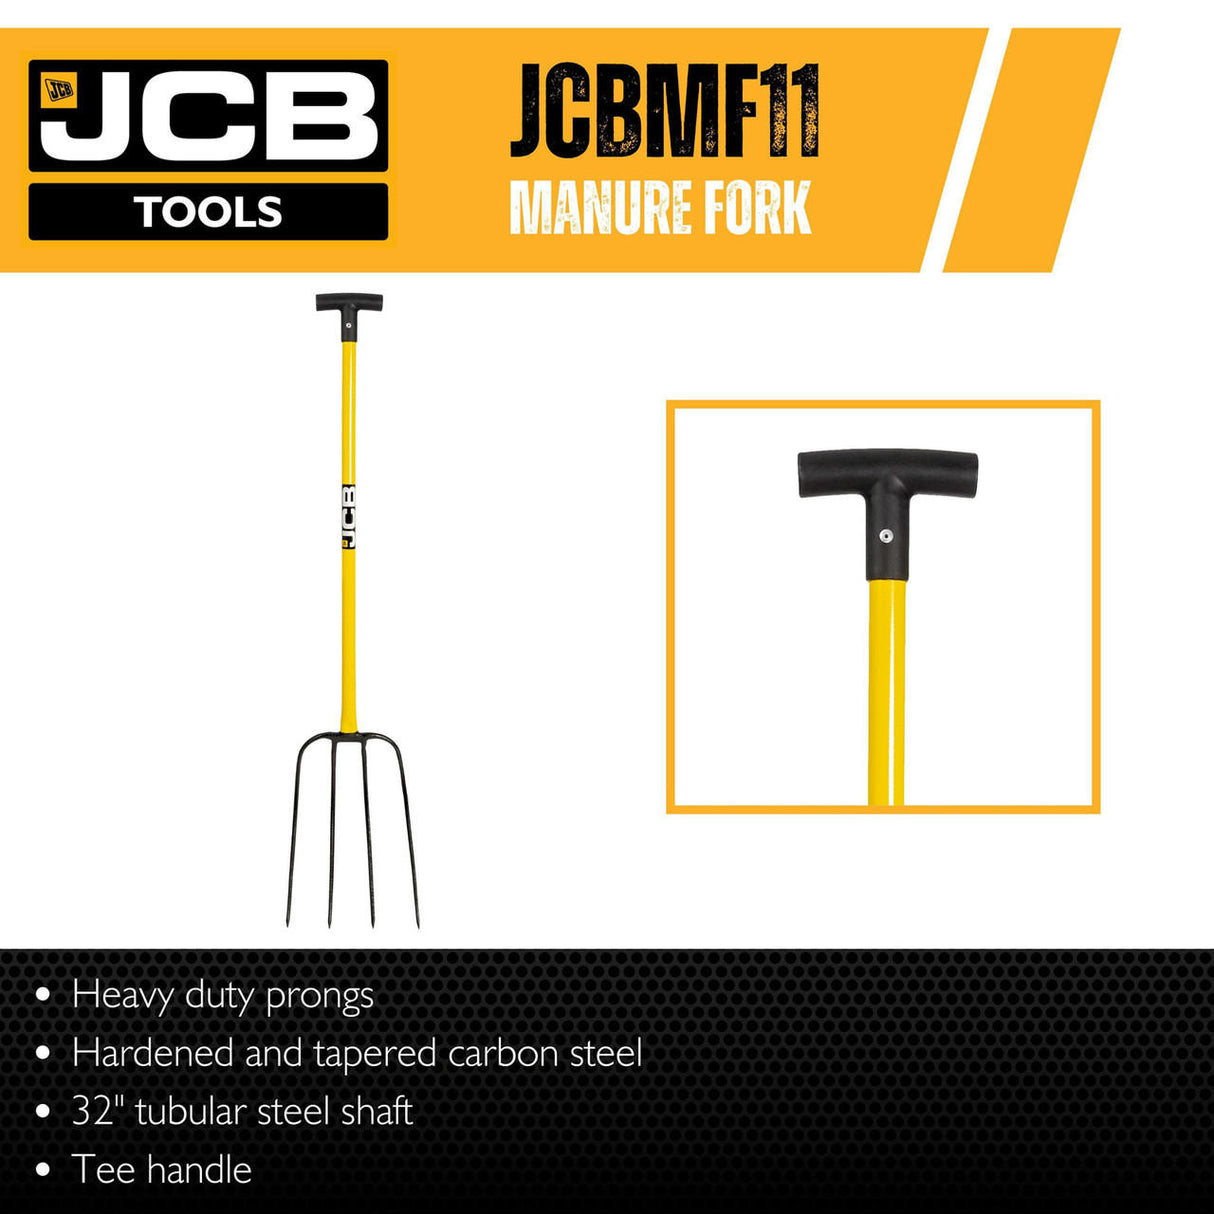 jcb tools JCB Professional Manure Fork 4 Prong T Handle | JCBMF11